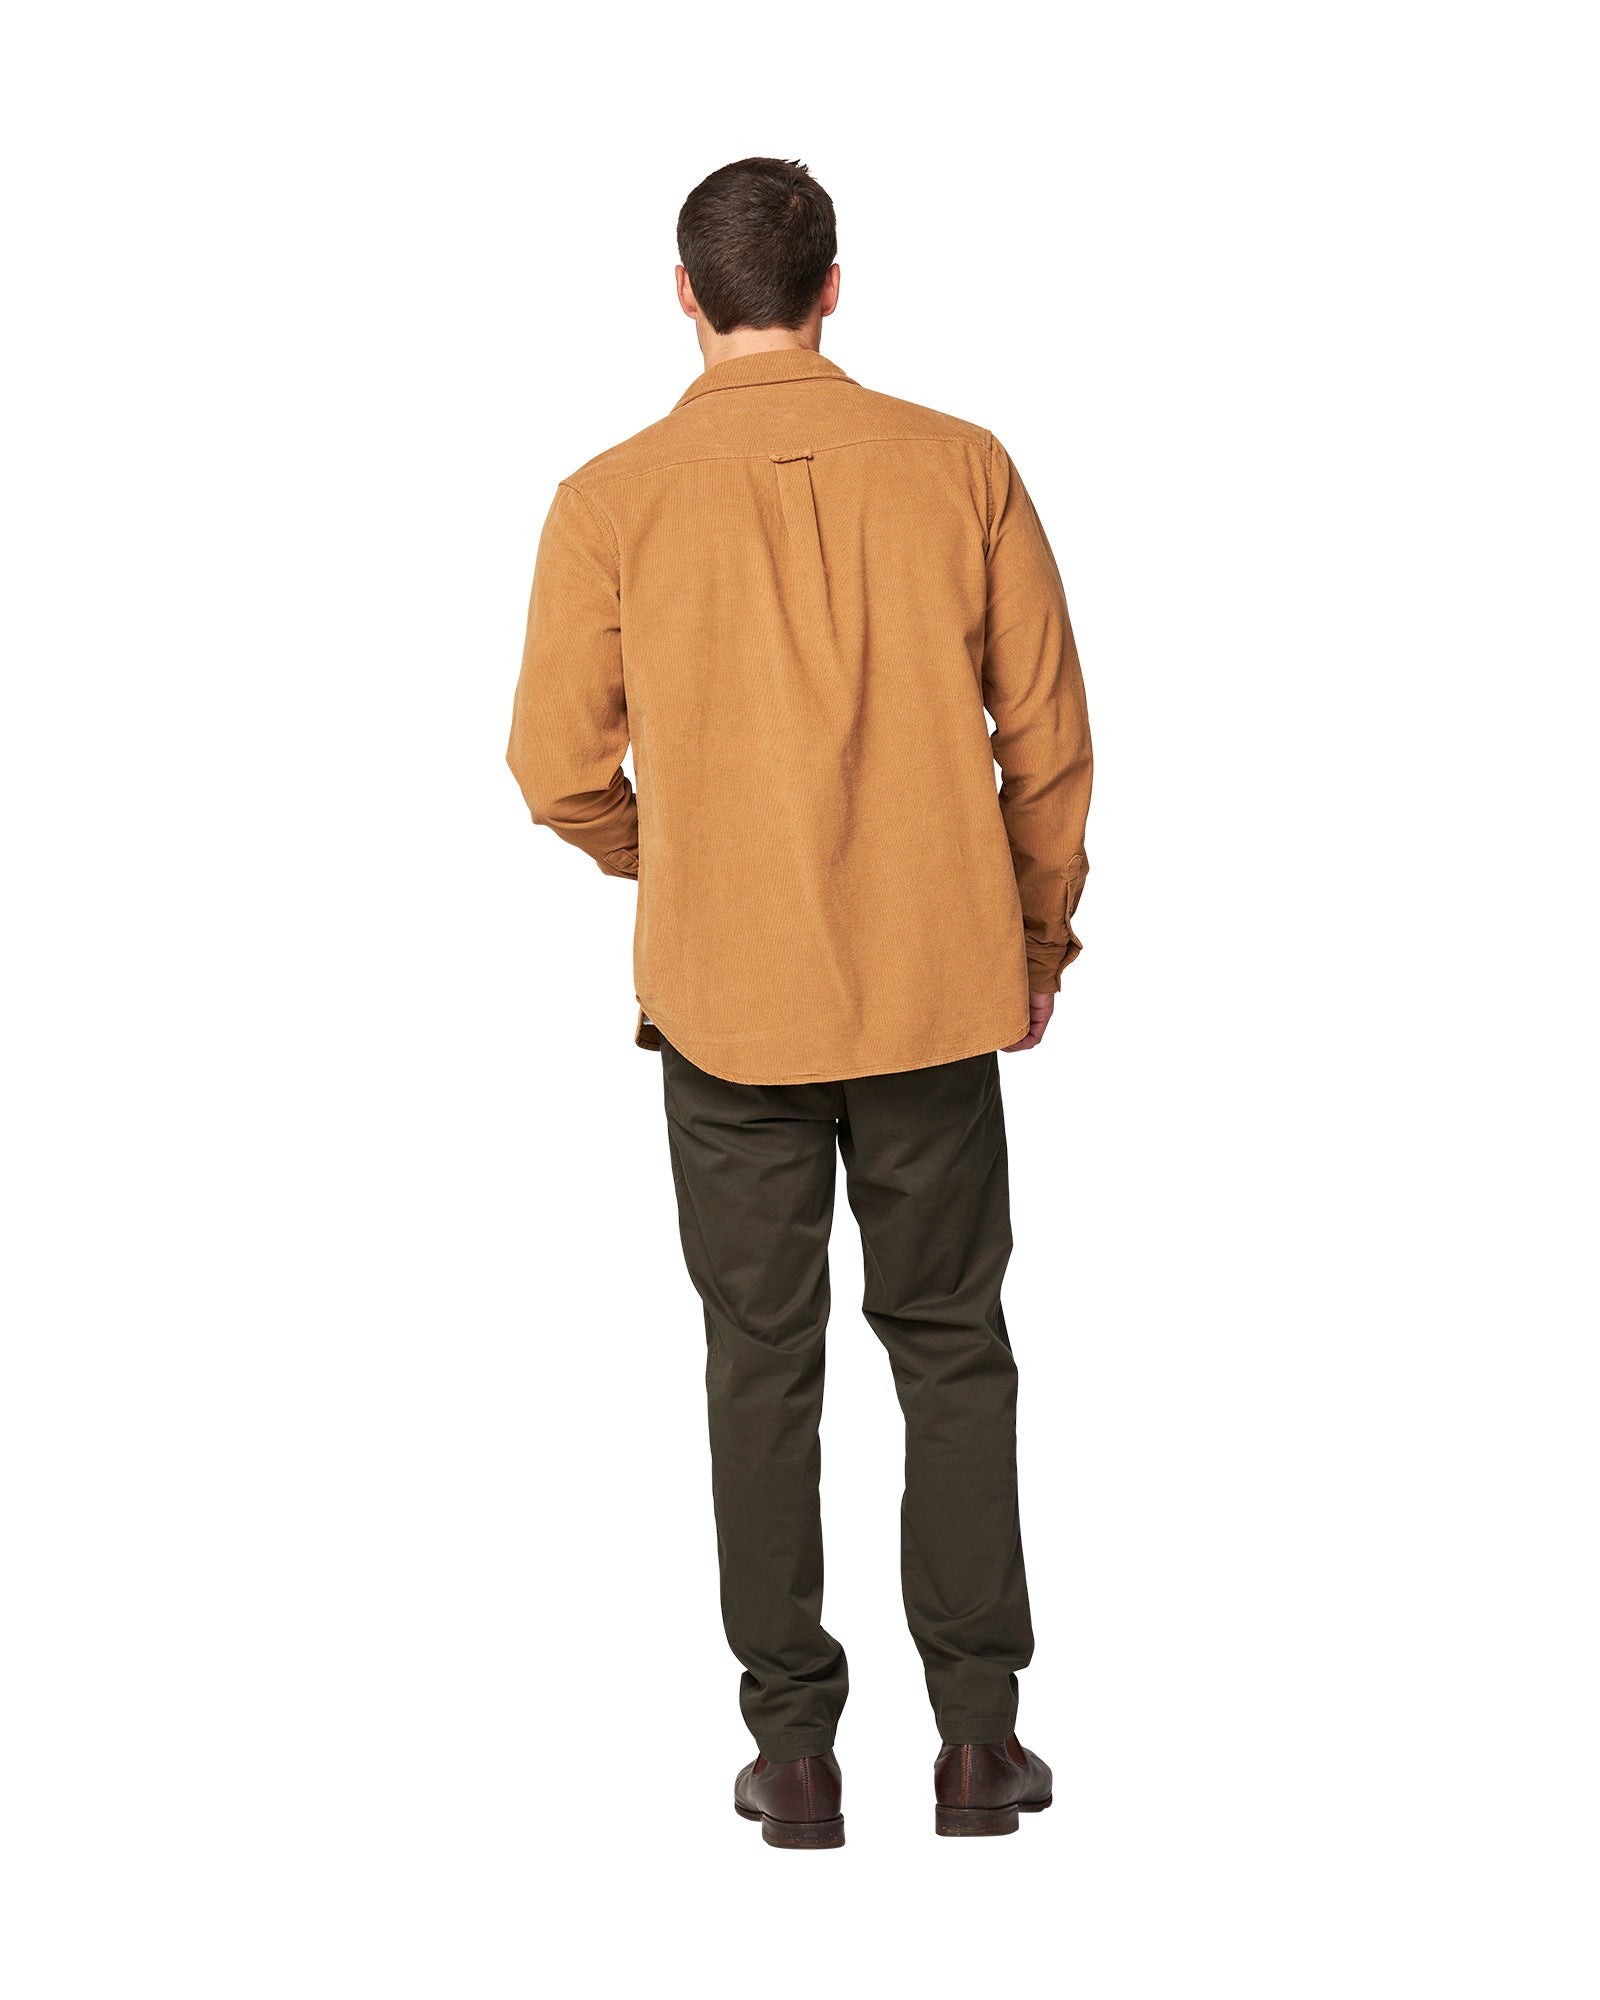 Mens - Long Sleeve Shirt - Corduroy - Ledge - Sand